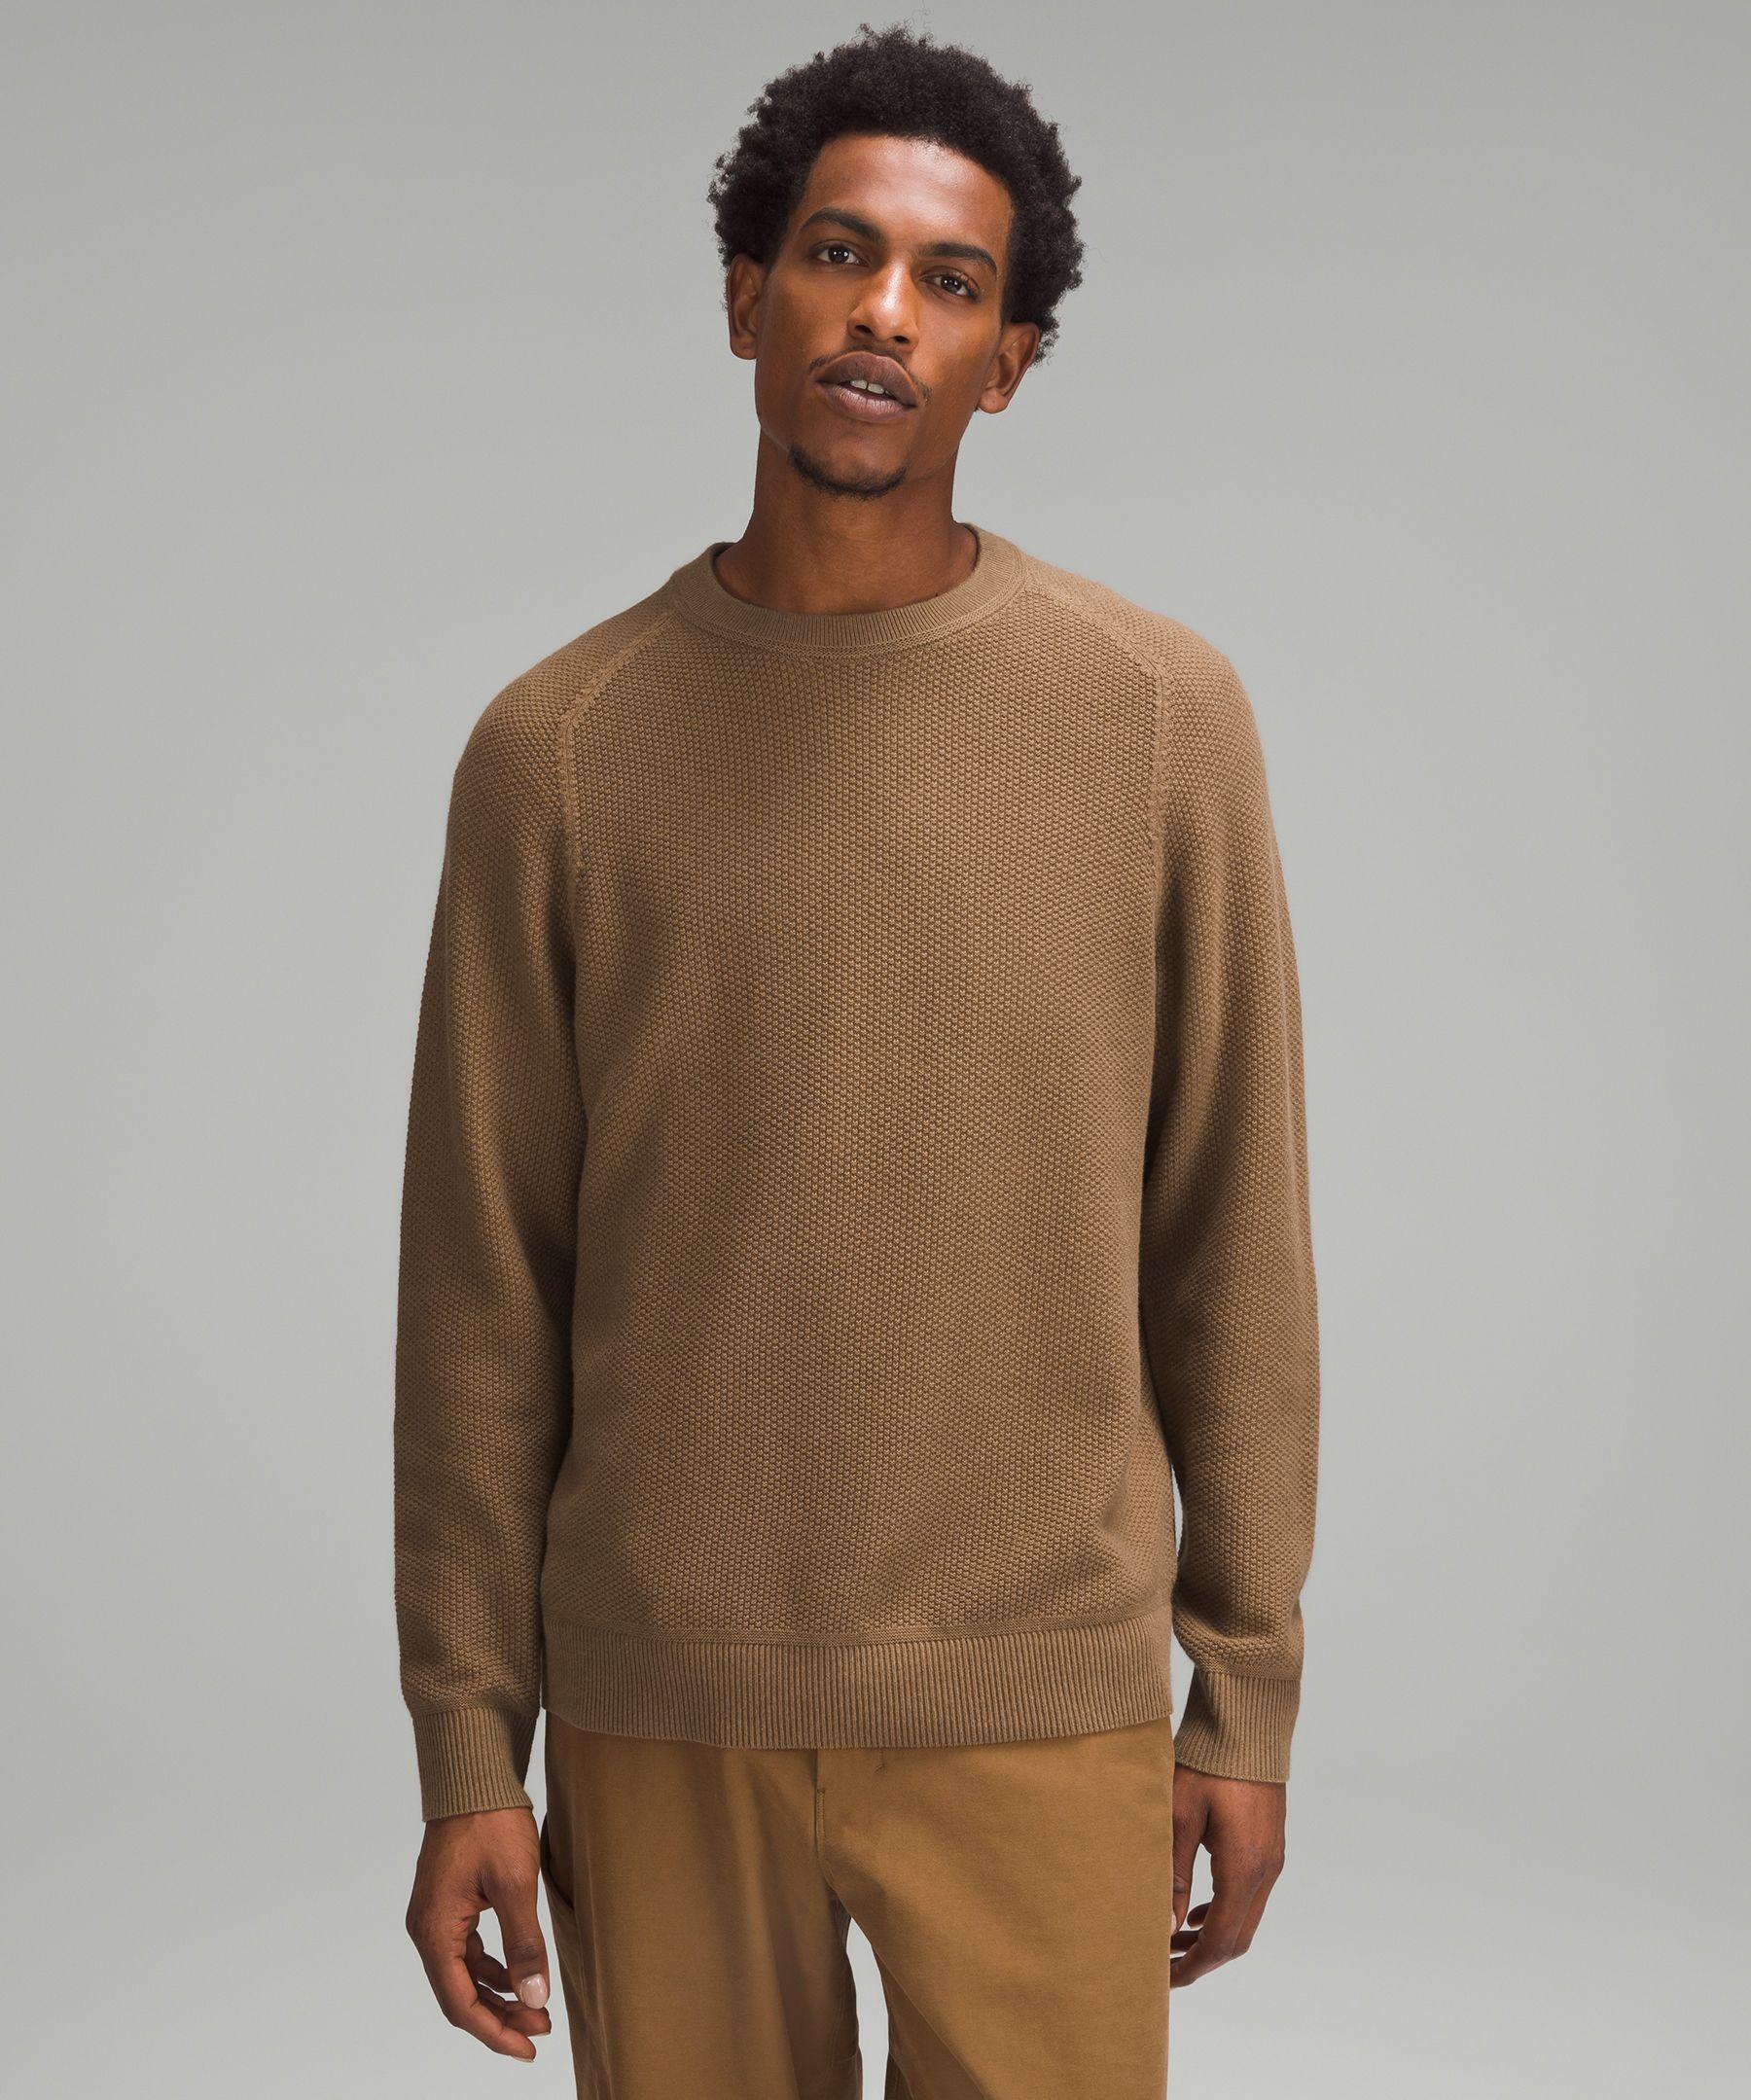 Lululemon Multi-Texture Crew Neck Sweater Sweatshirt